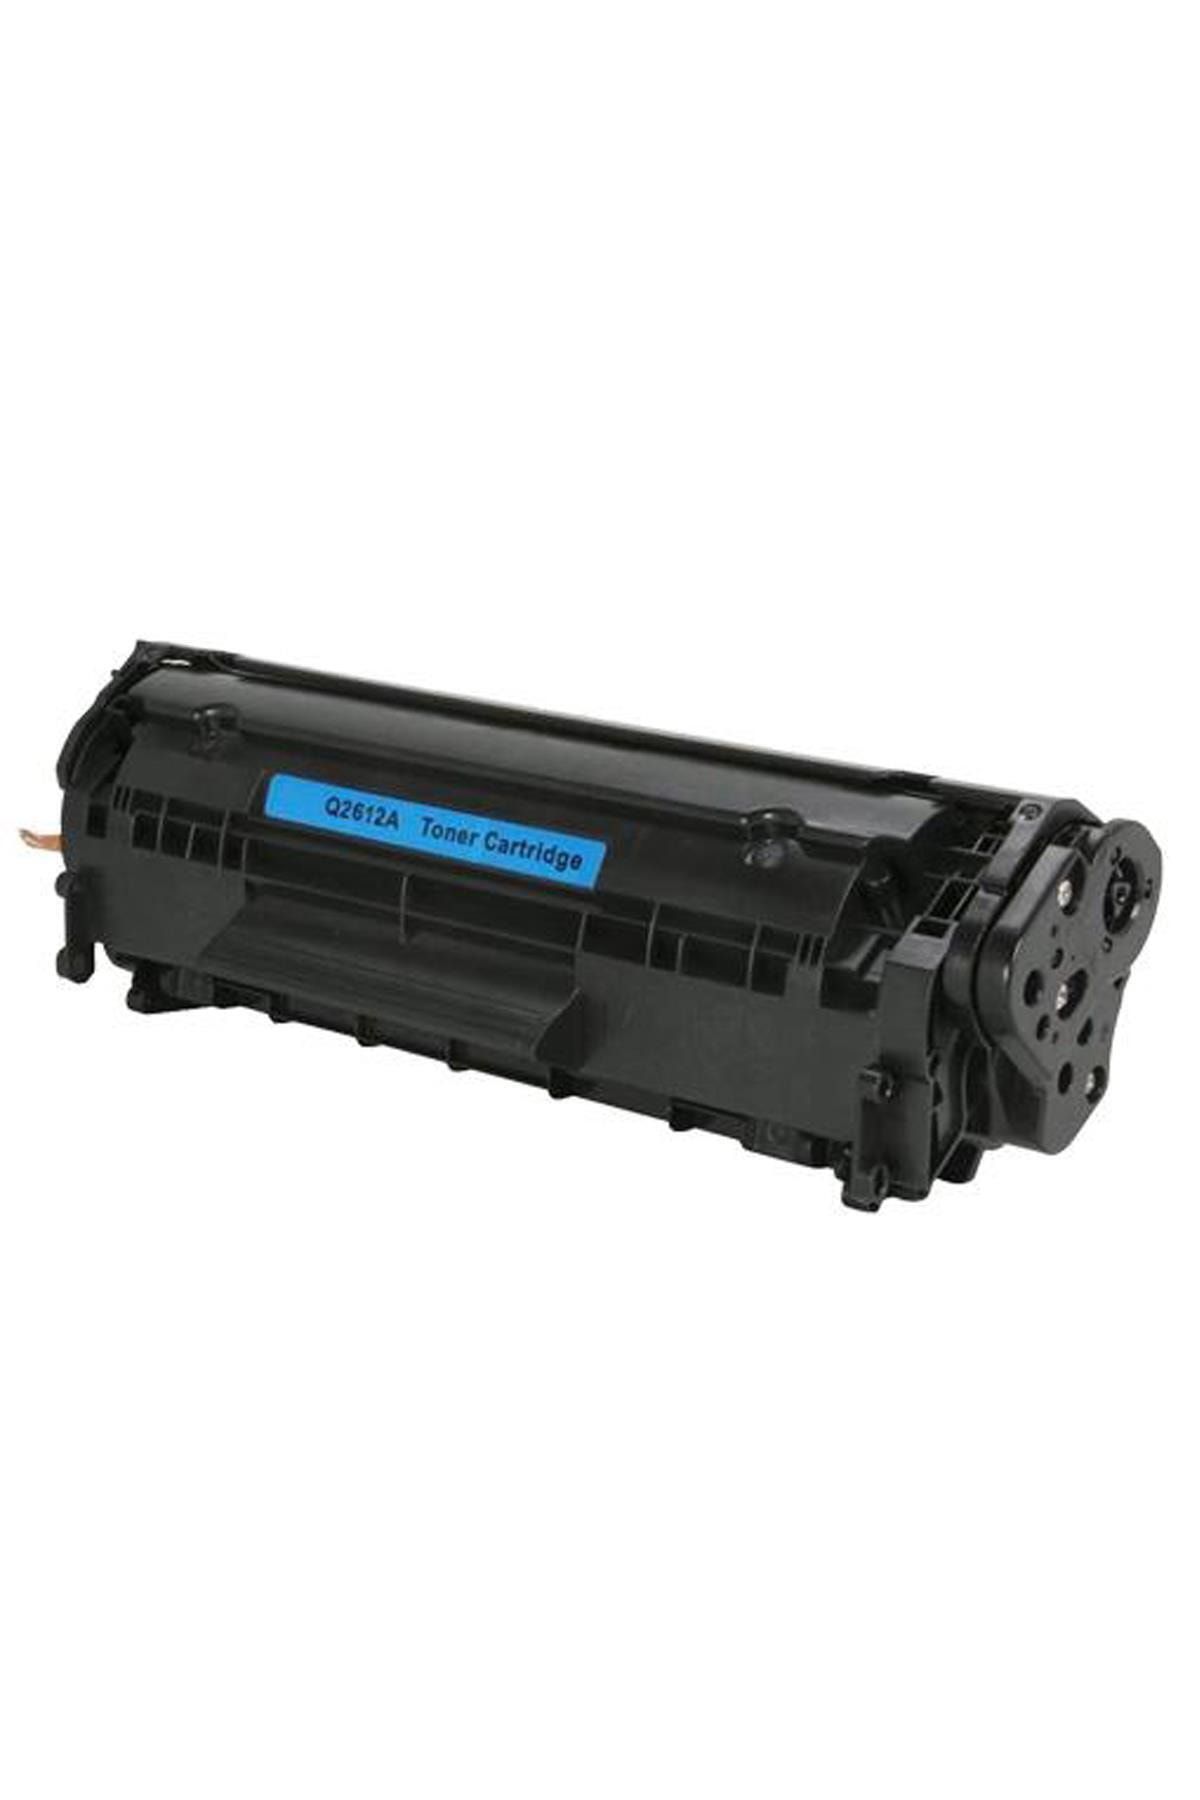 ekoset HP LaserJet 1020/1022/1022n/1022nw Muadil Toner HP12A